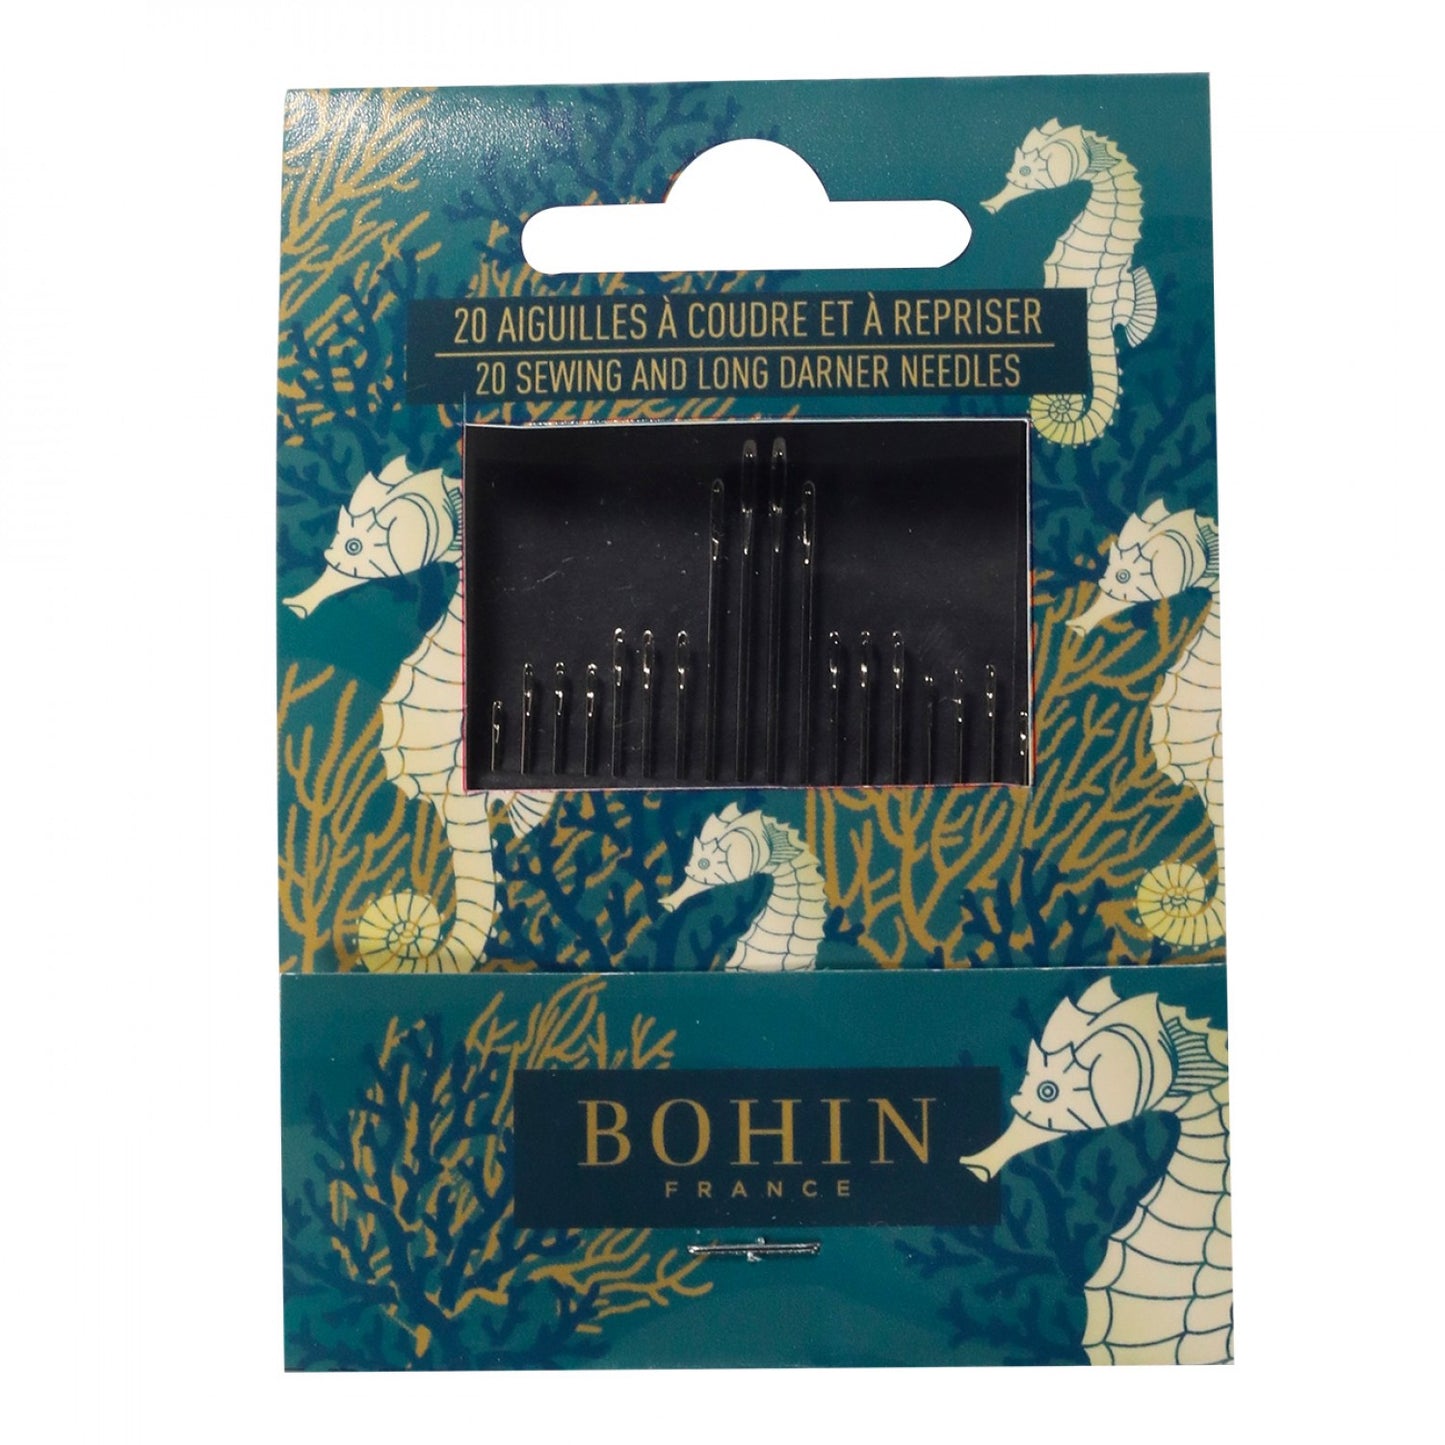 Assorted Needles Books - Bohin